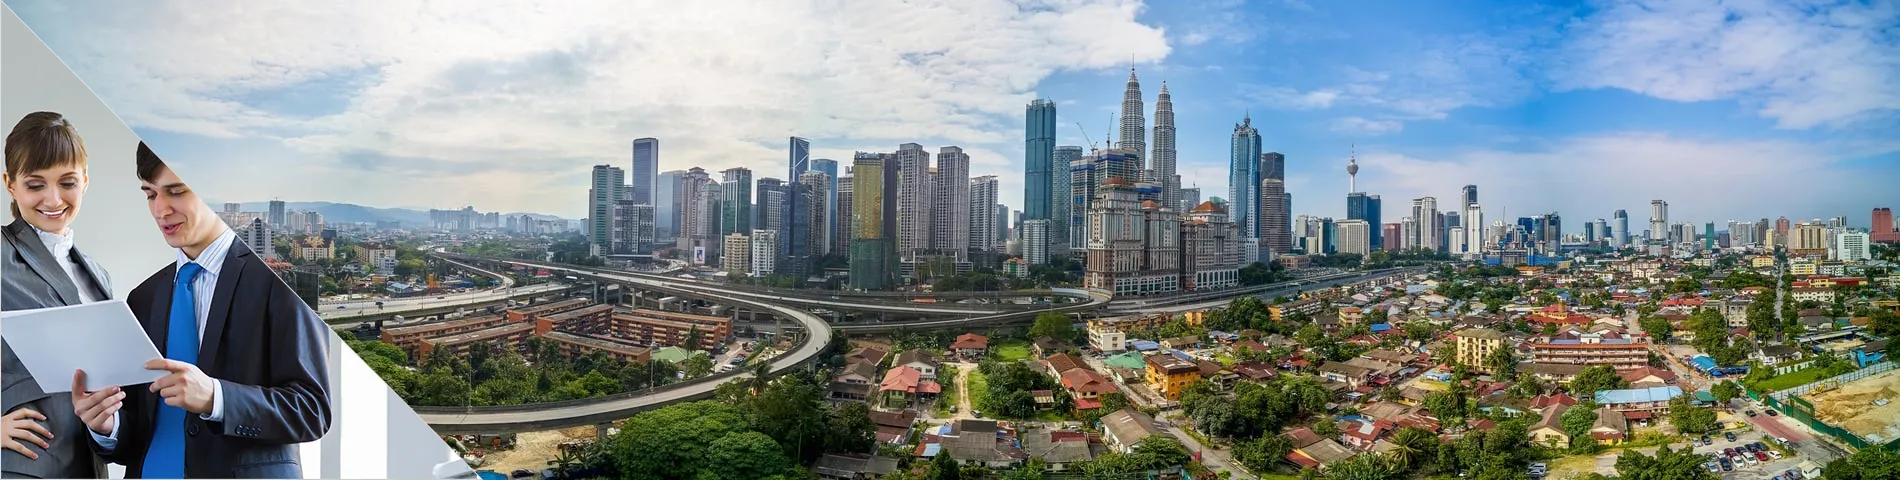 Kuala Lumpur - Business One-to-One